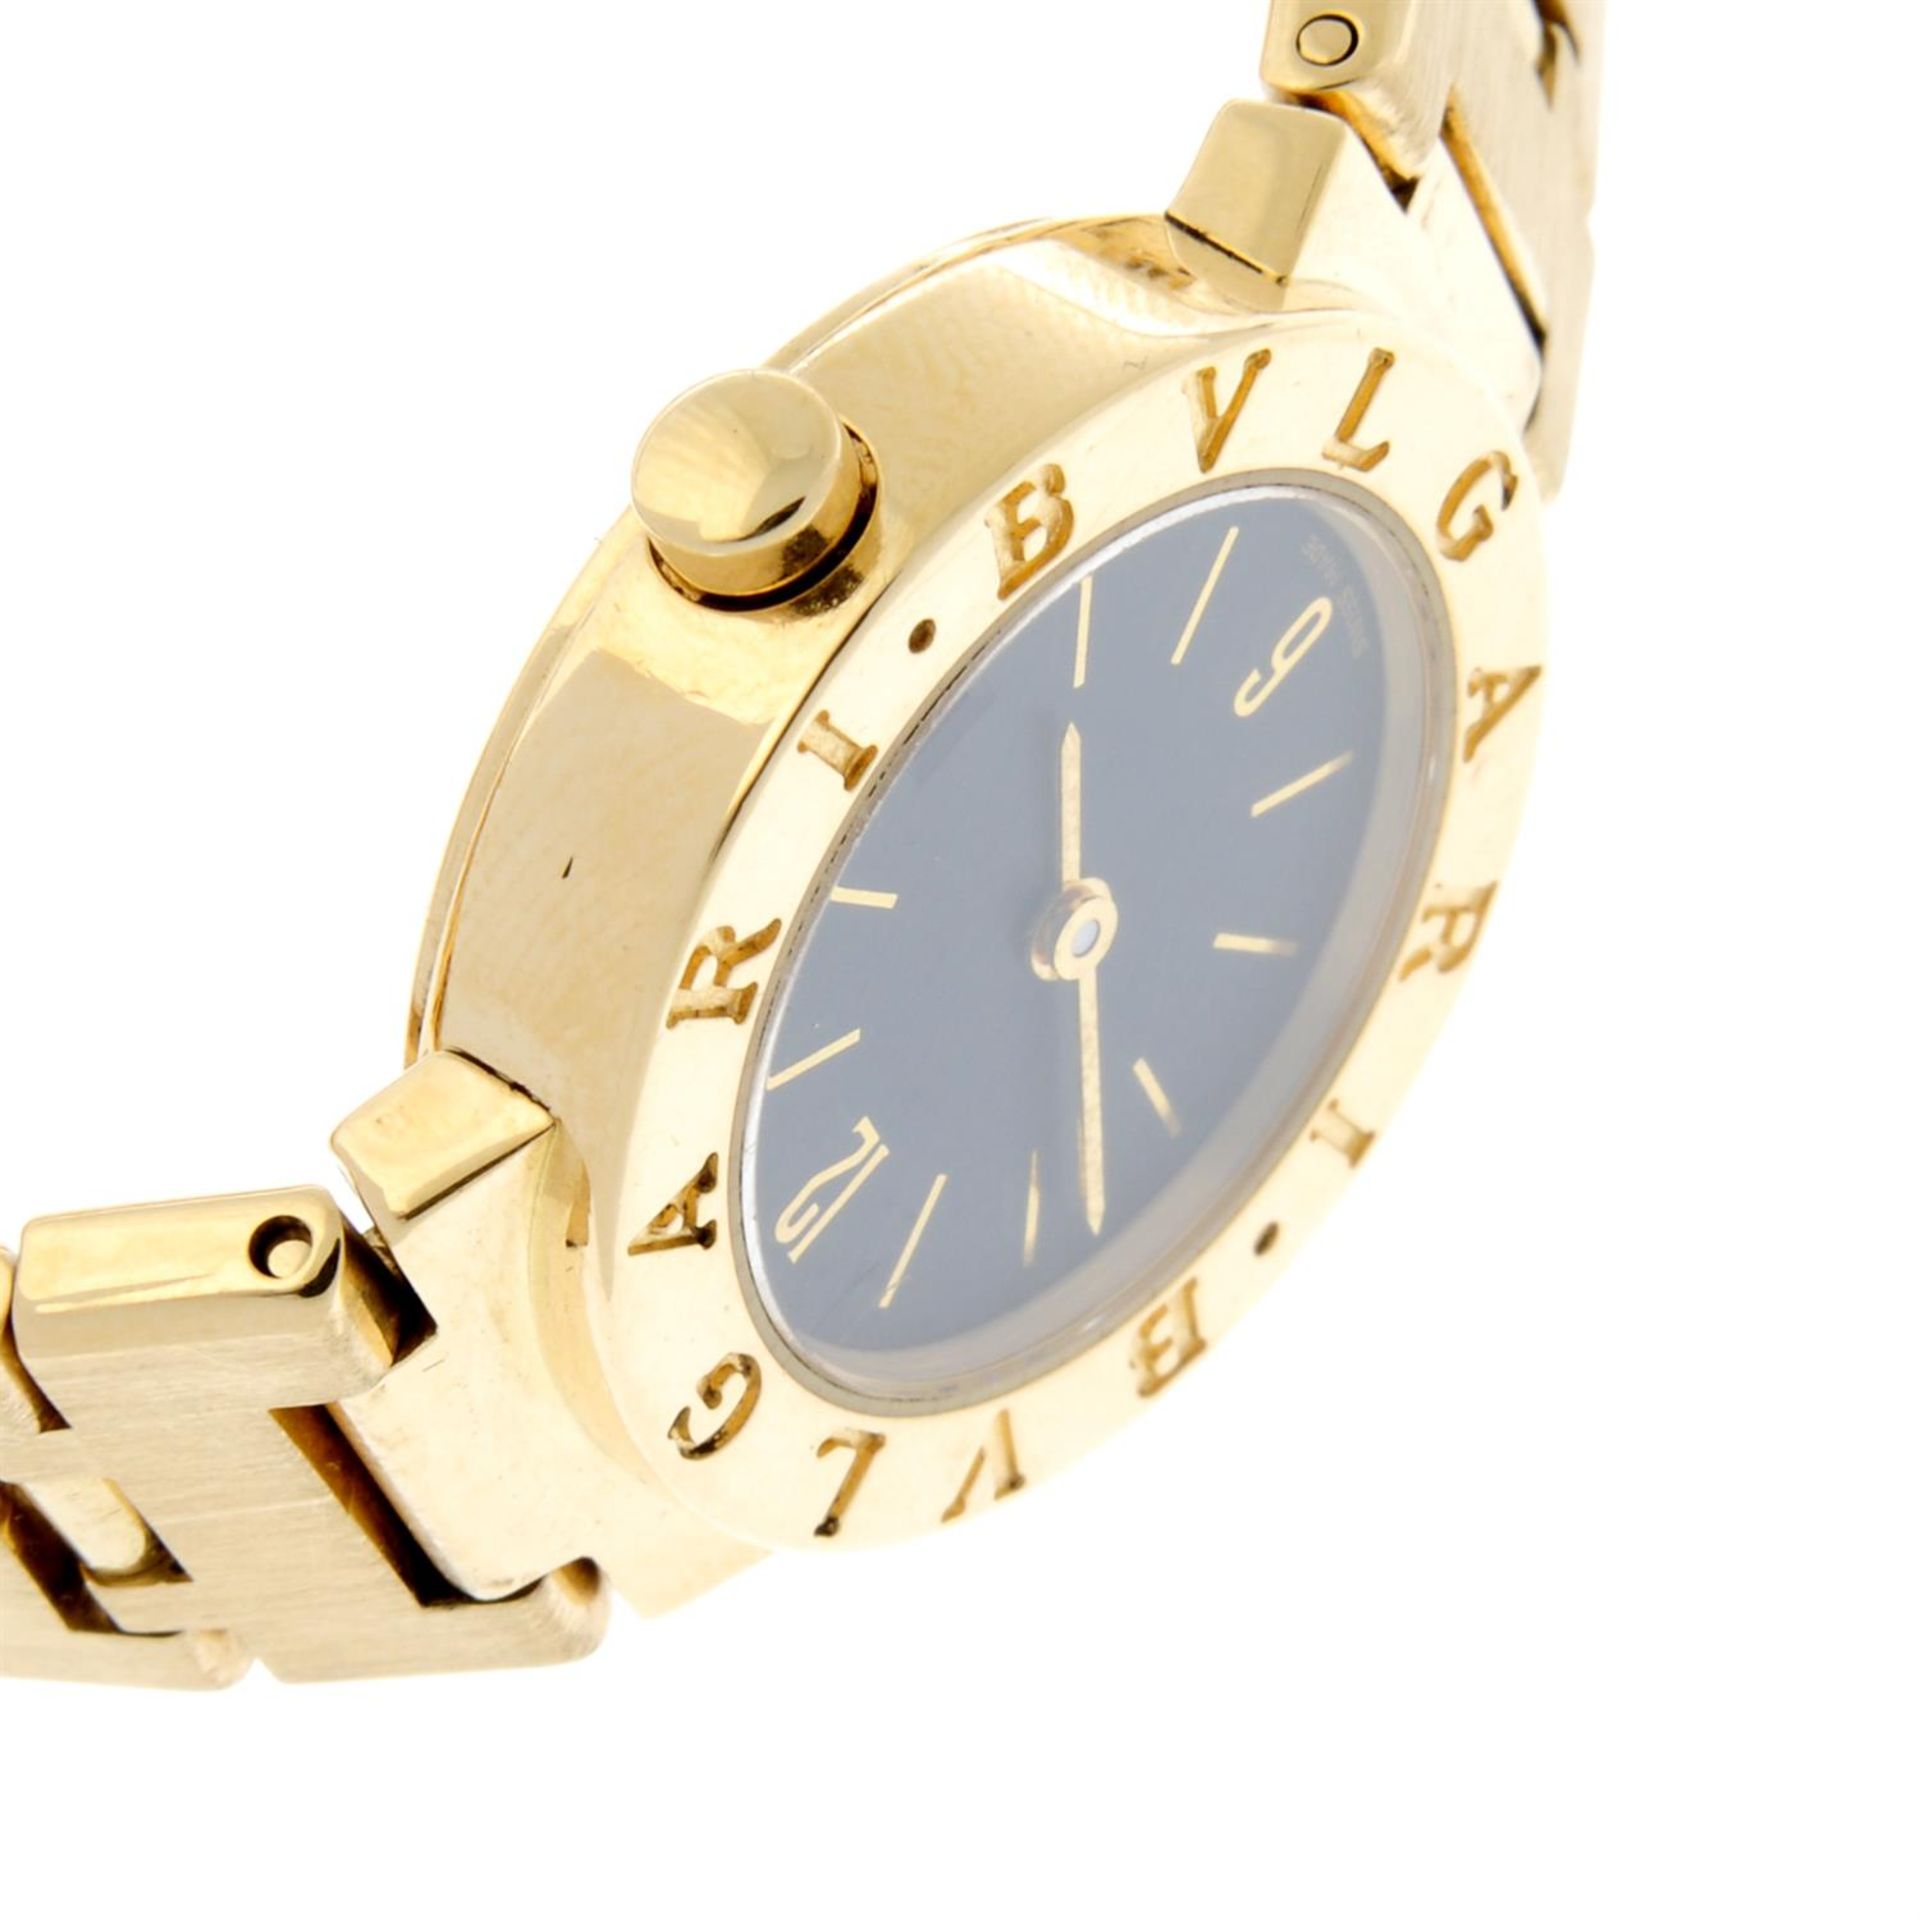 BULGARI - an 18ct yellow gold Bulgari bracelet watch, 23mm. - Image 3 of 4